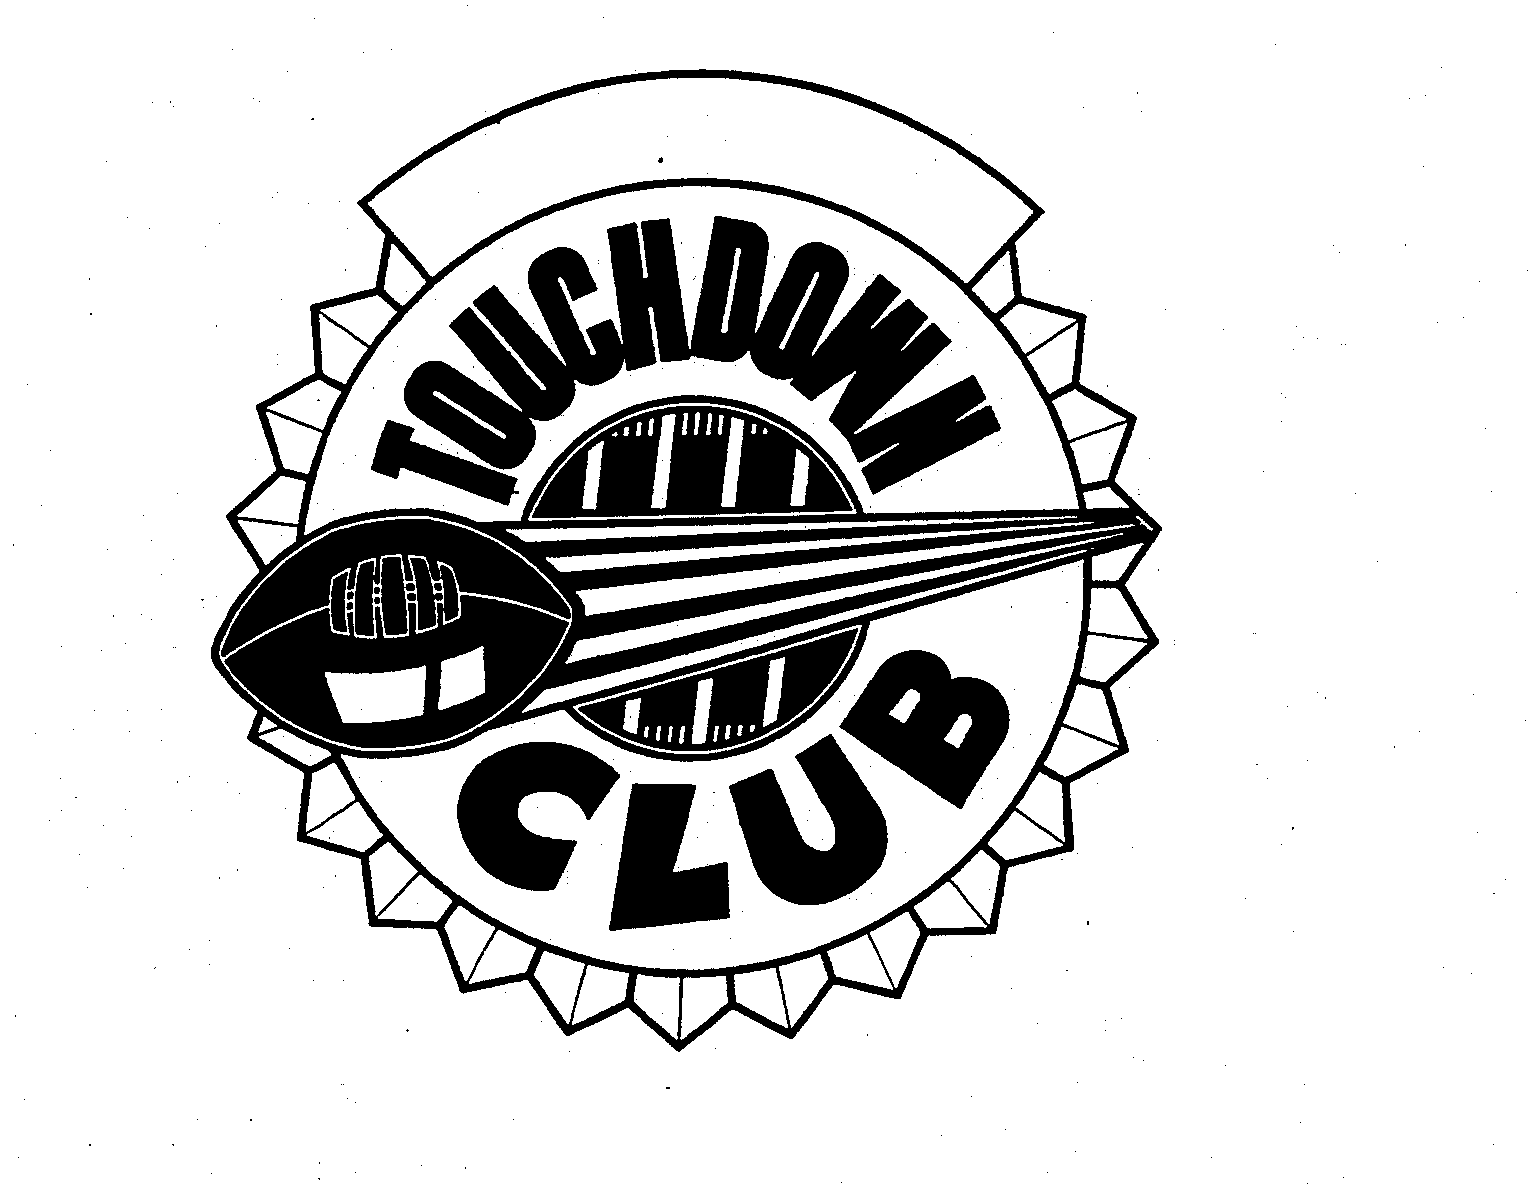 Trademark Logo TOUCHDOWN CLUB